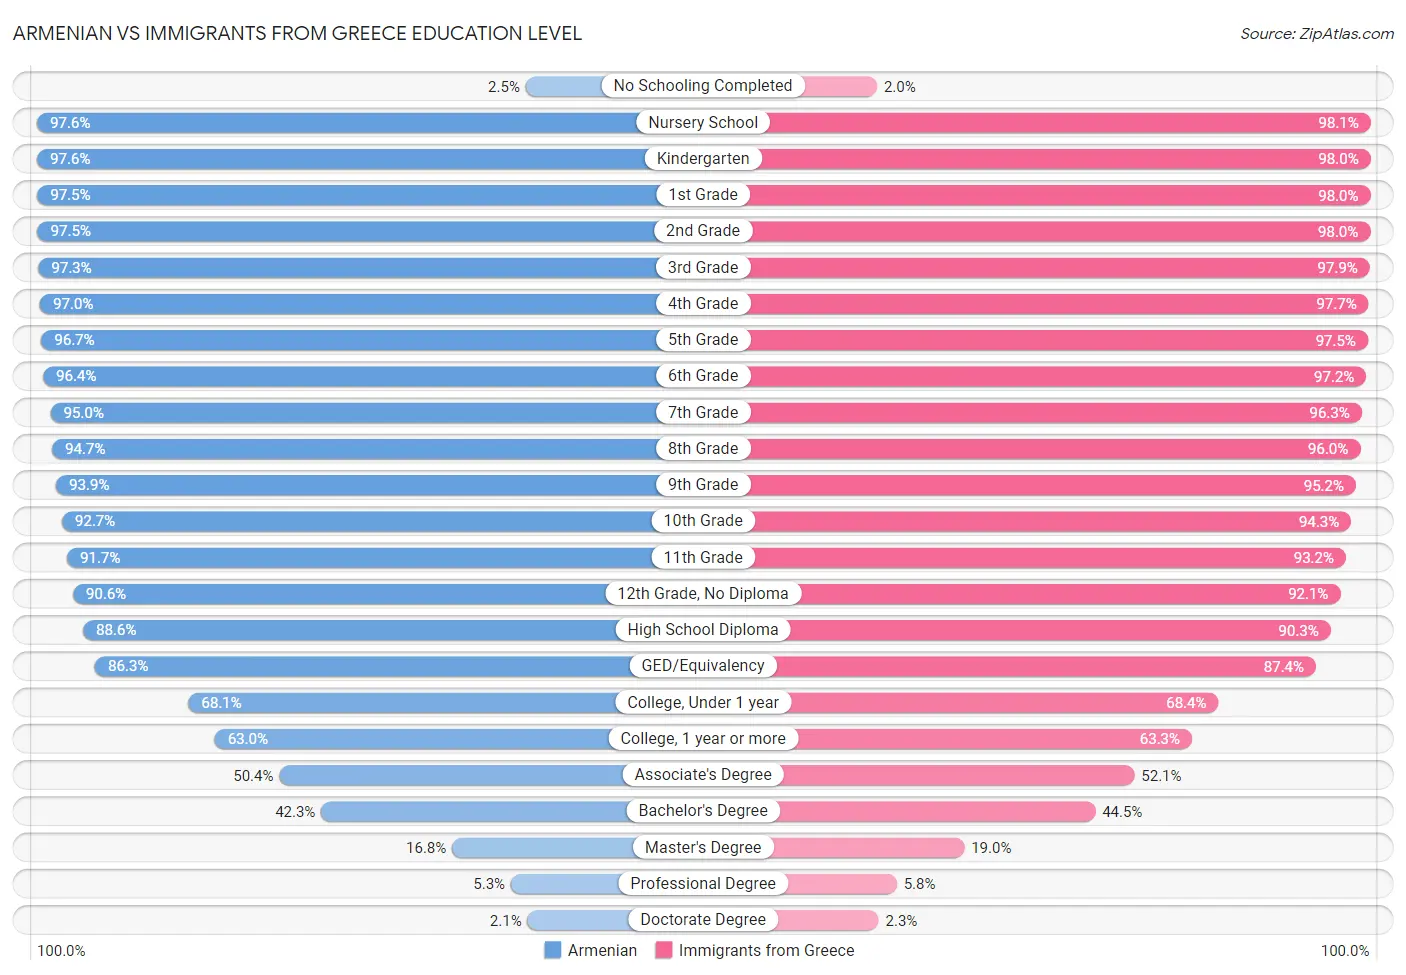 Armenian vs Immigrants from Greece Education Level